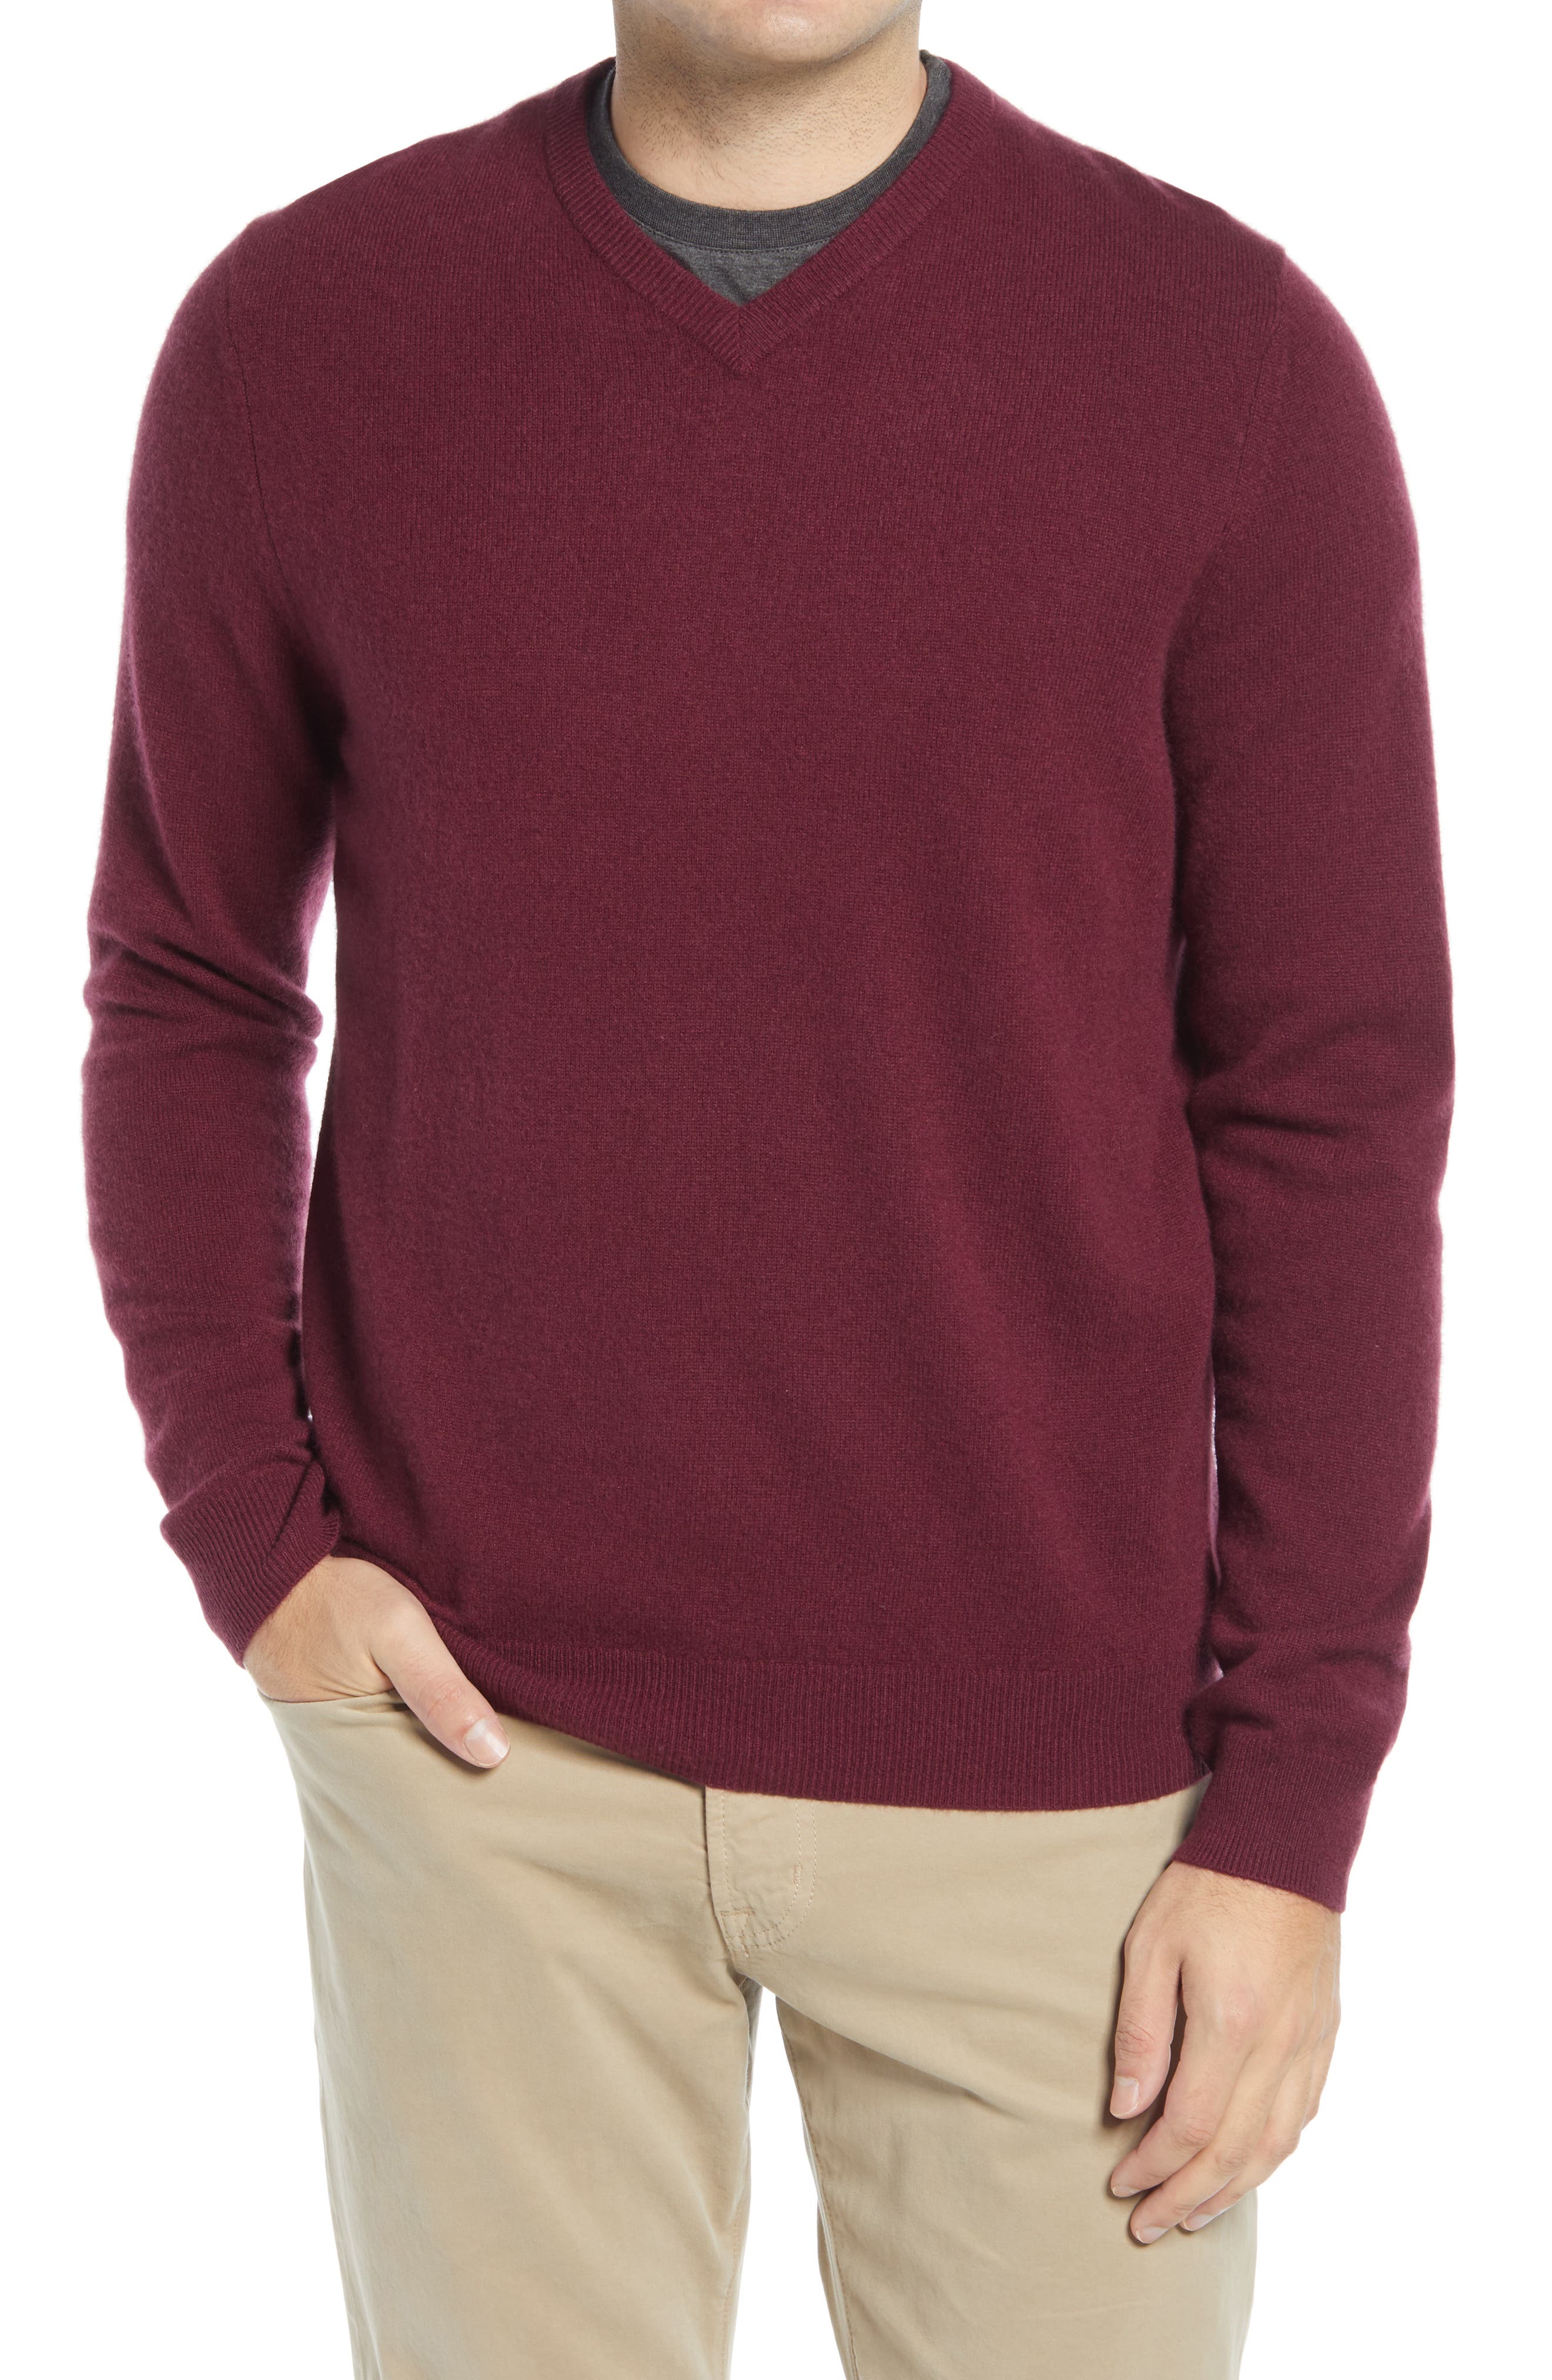 Men's V-Neck Sweaters | Nordstrom